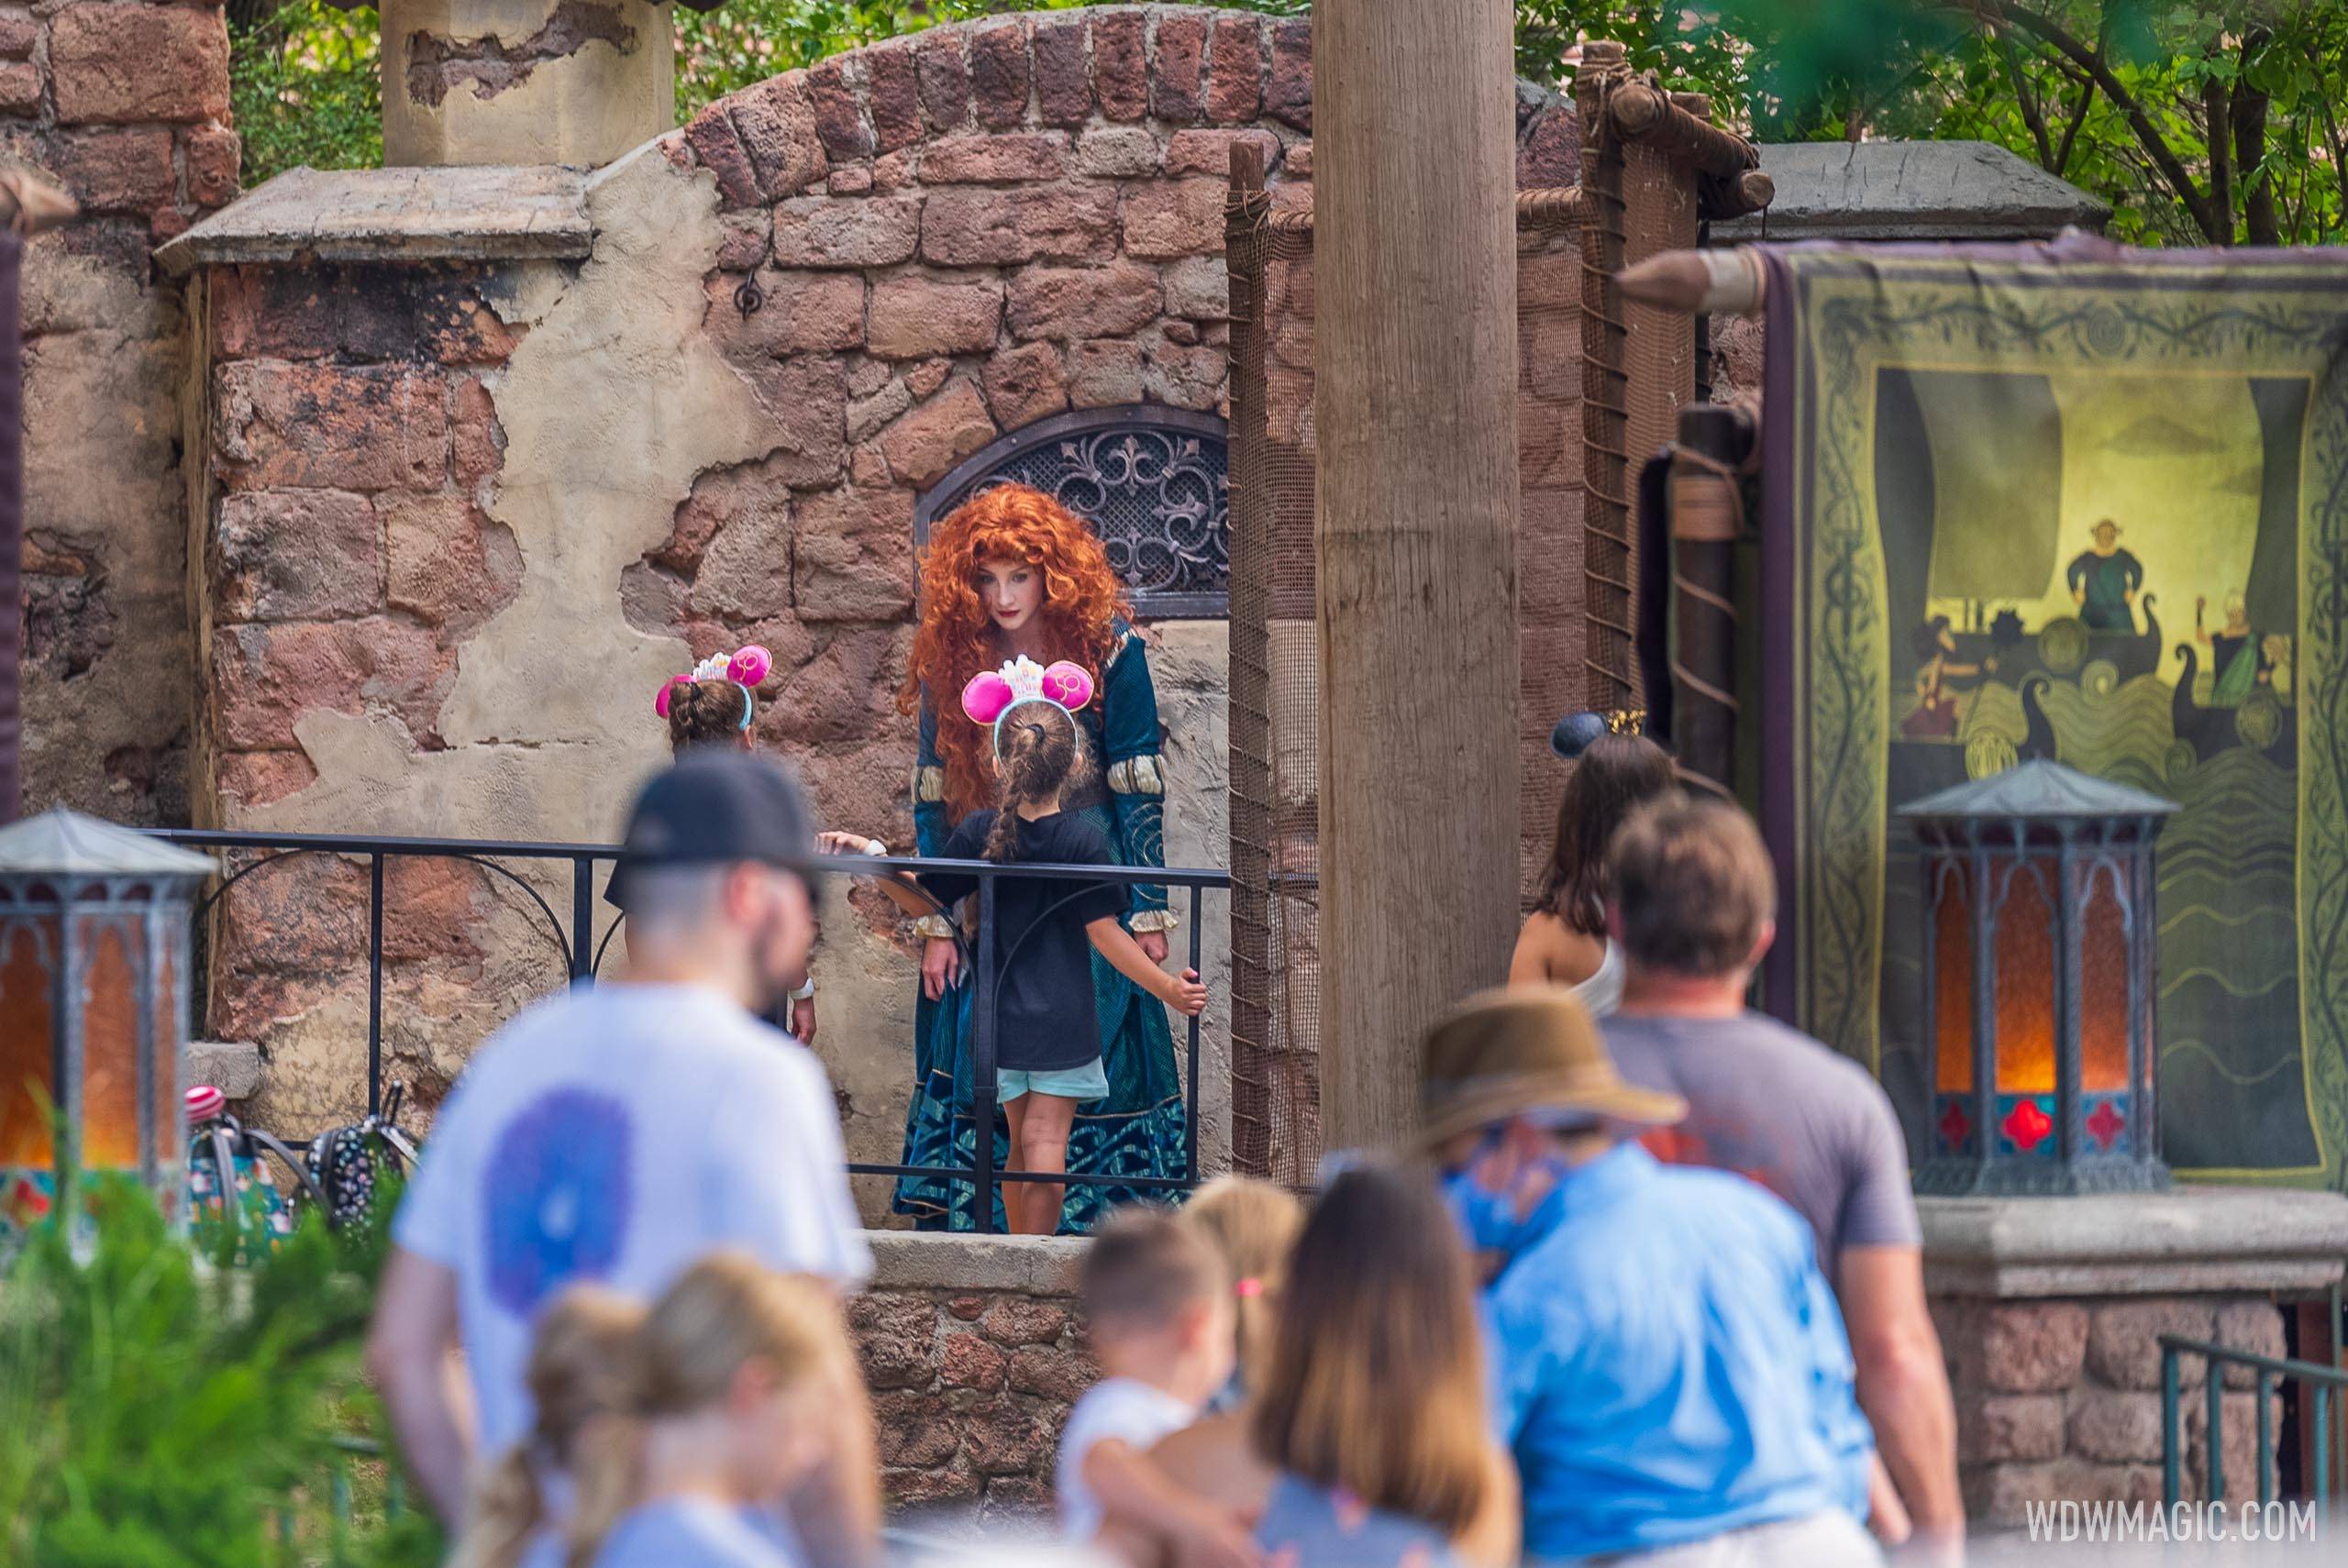 Merida meet and greet at Fairytale Garden reopens at Magic Kingdom